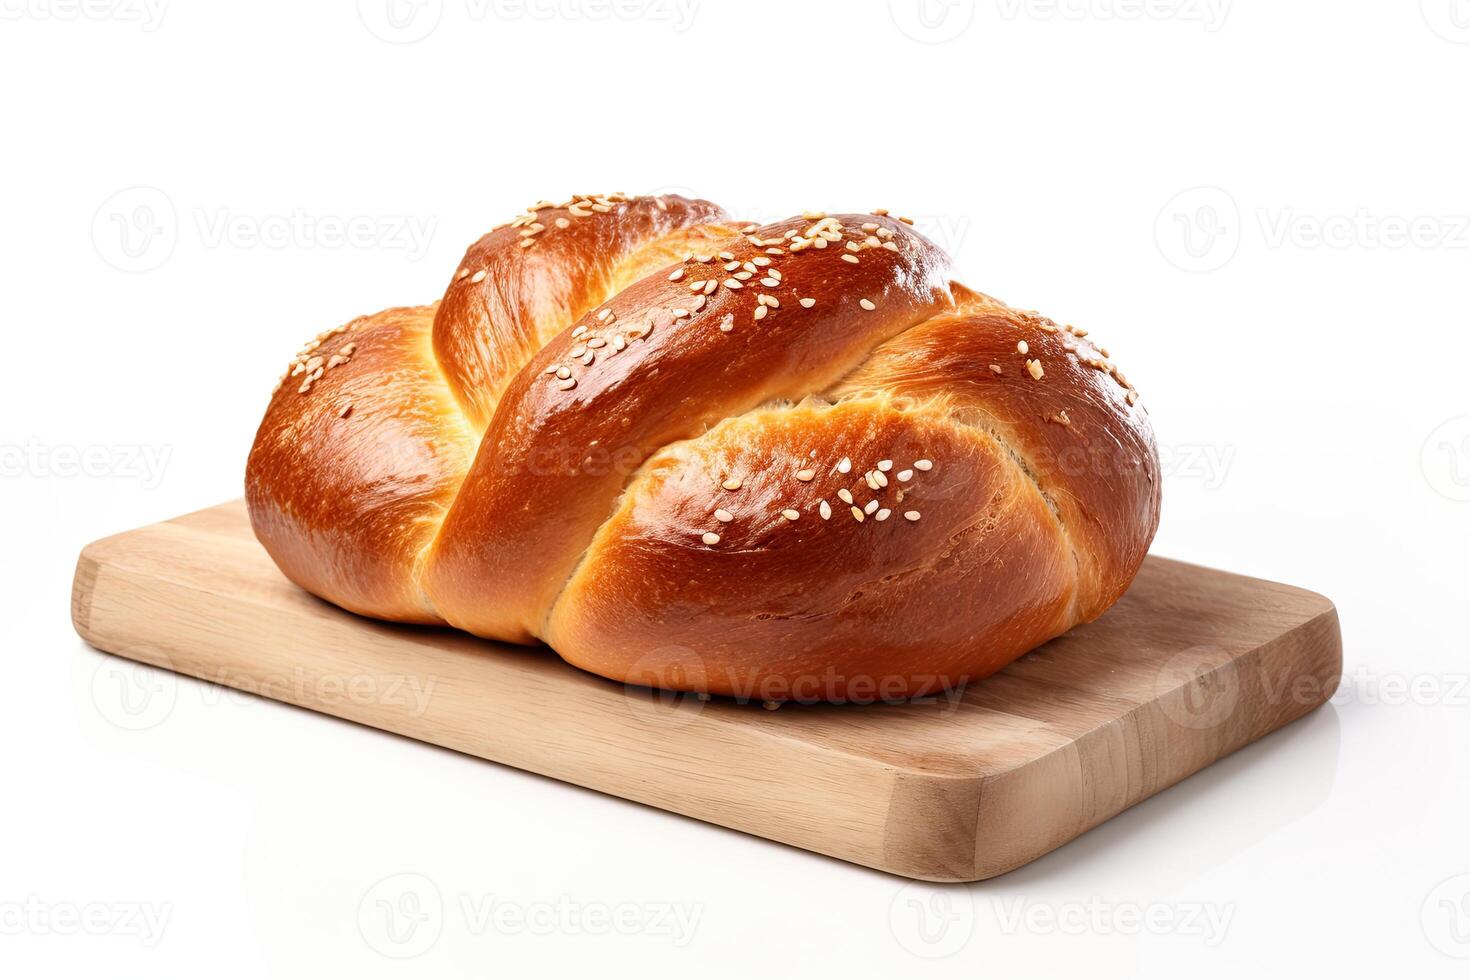 ai genererad pretzel bröd närbild foto